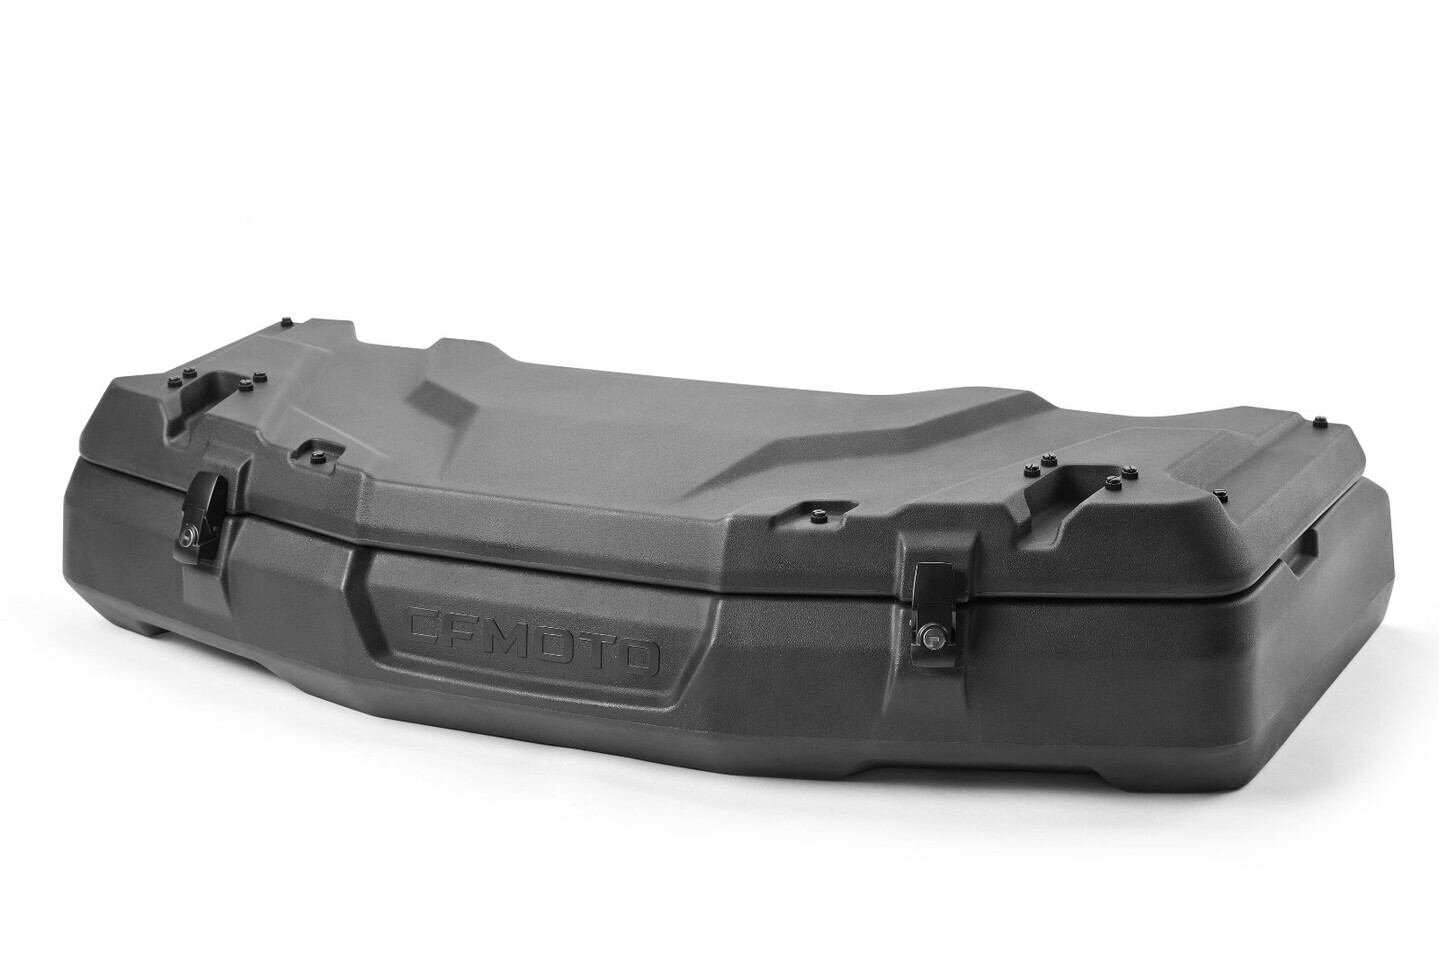 Box for CF-Moto 450 DLX ATV front, 219,95 €